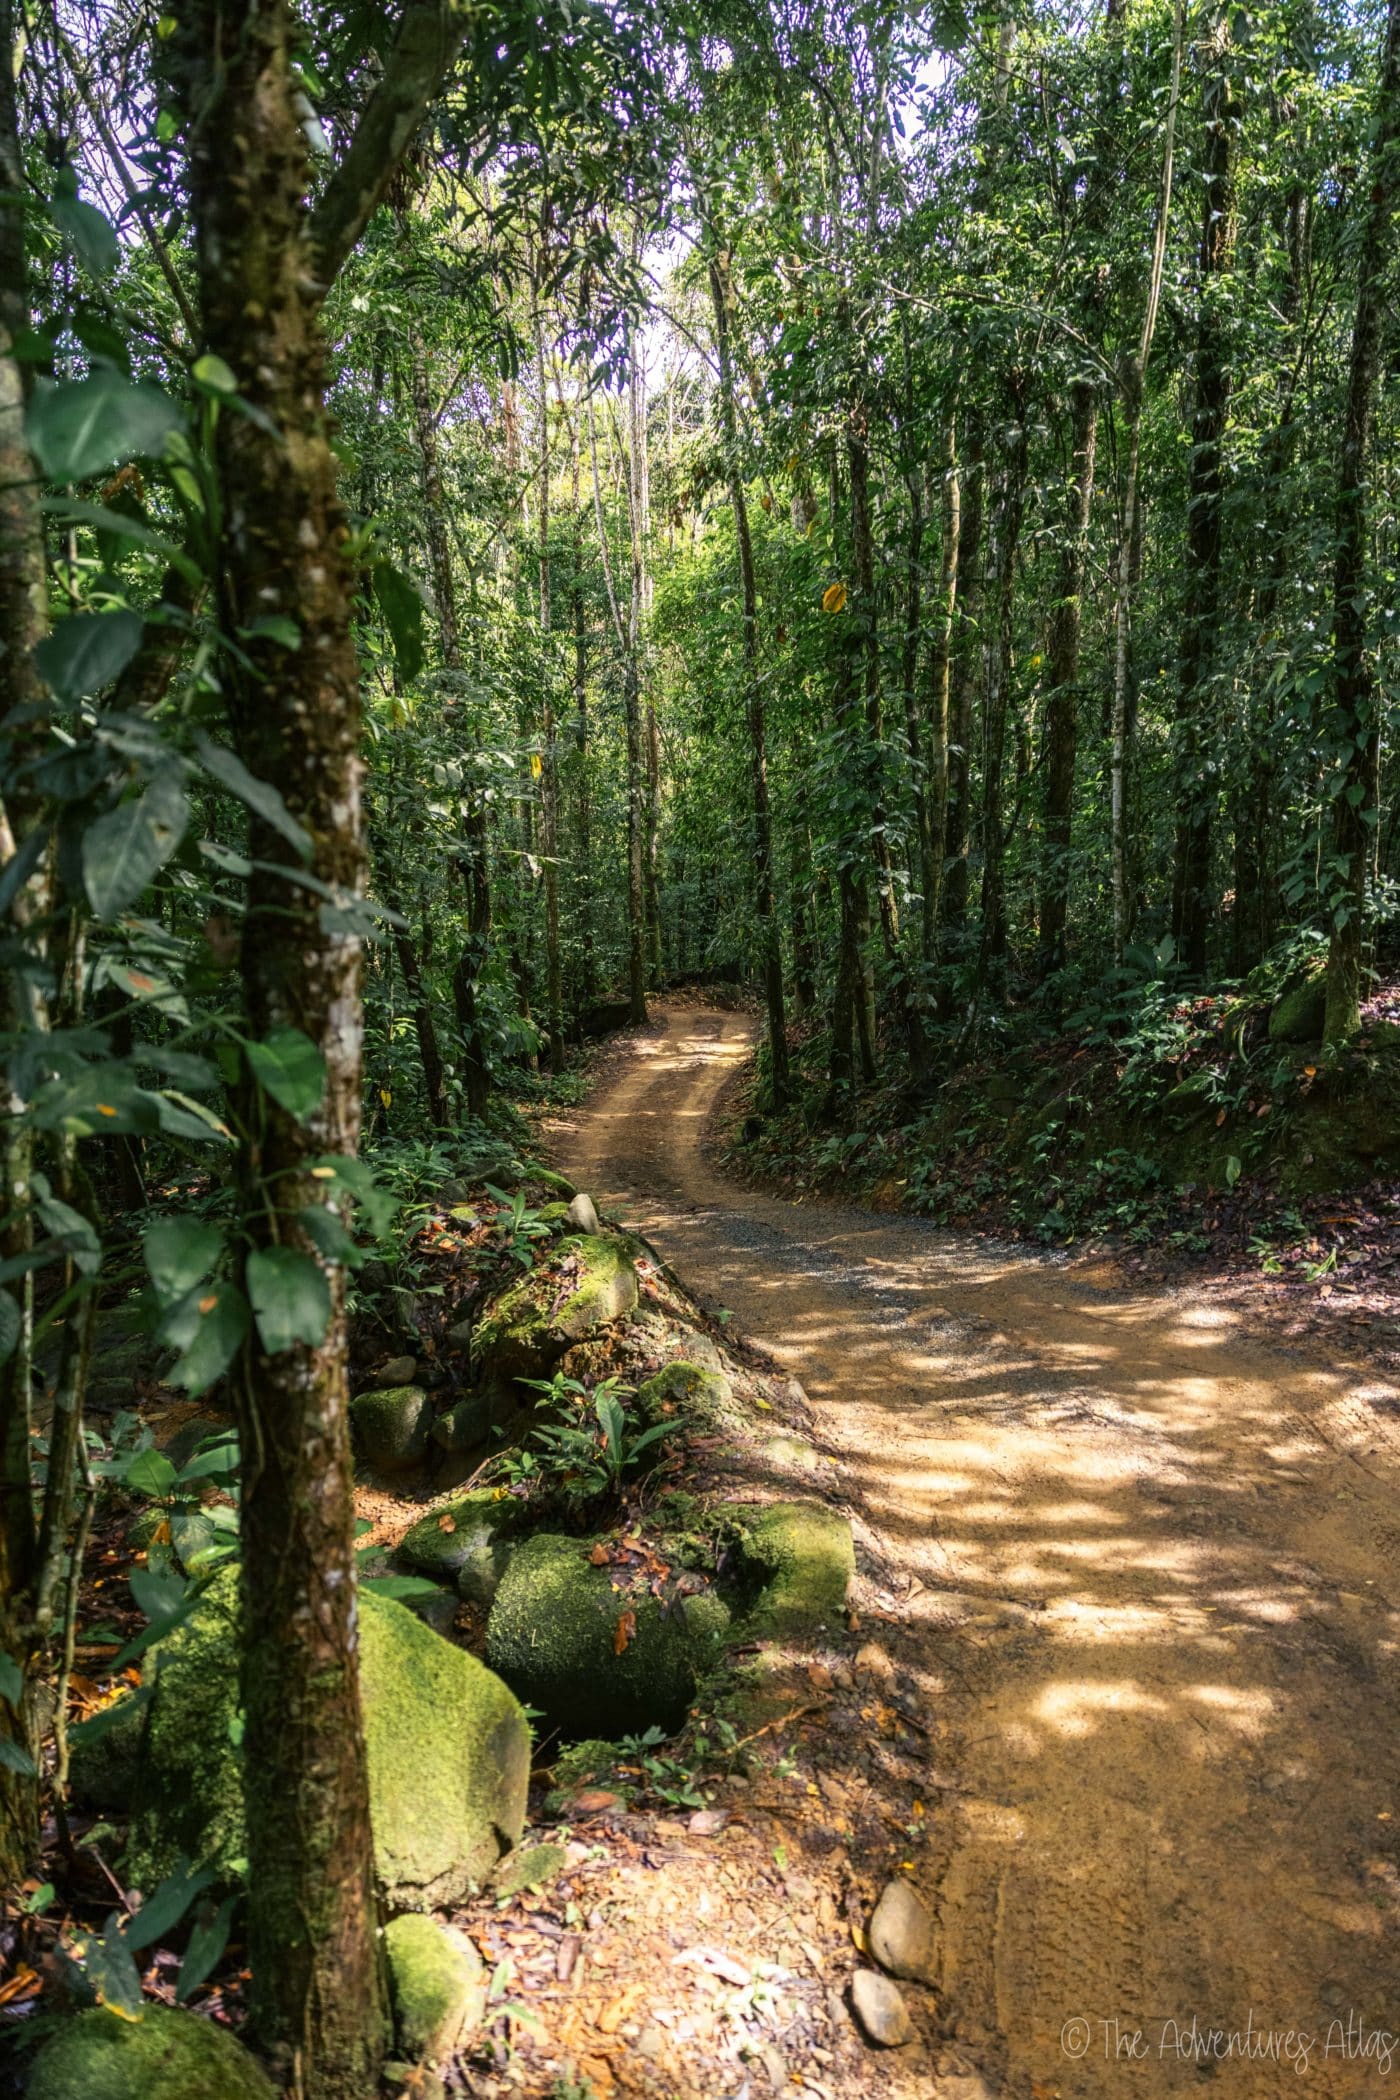 Road through the jungle in Costa Rica